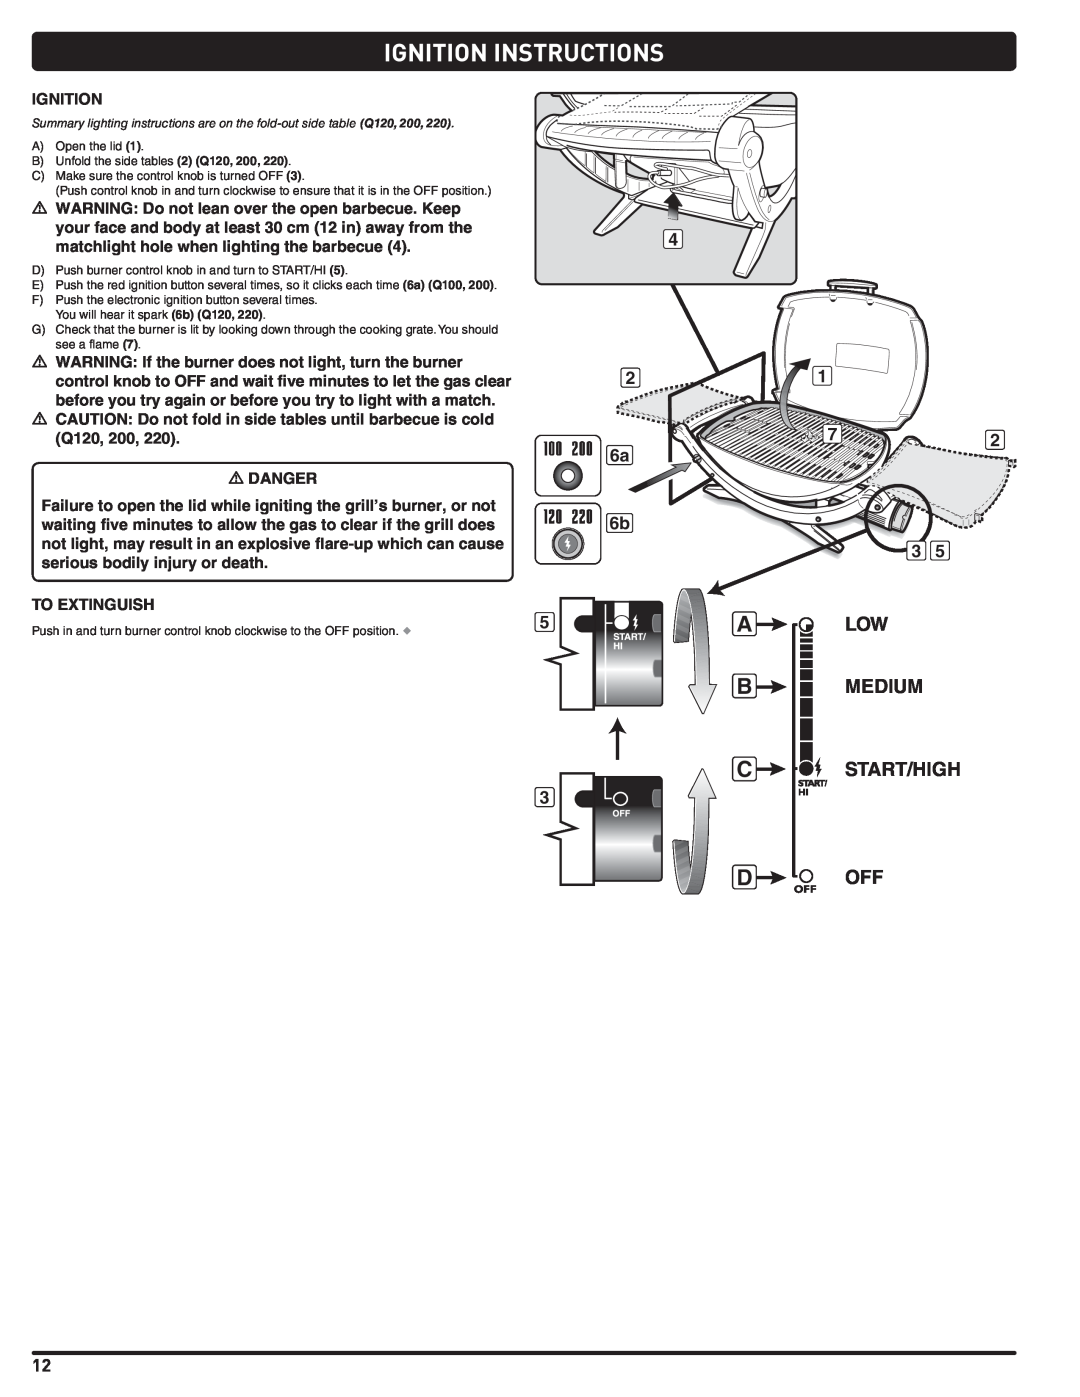 Weber 100, LP GAS GRILL, 220, 200, 120, 827020 instruction manual Ignition Instructions, Medium, D Off, Start/High 